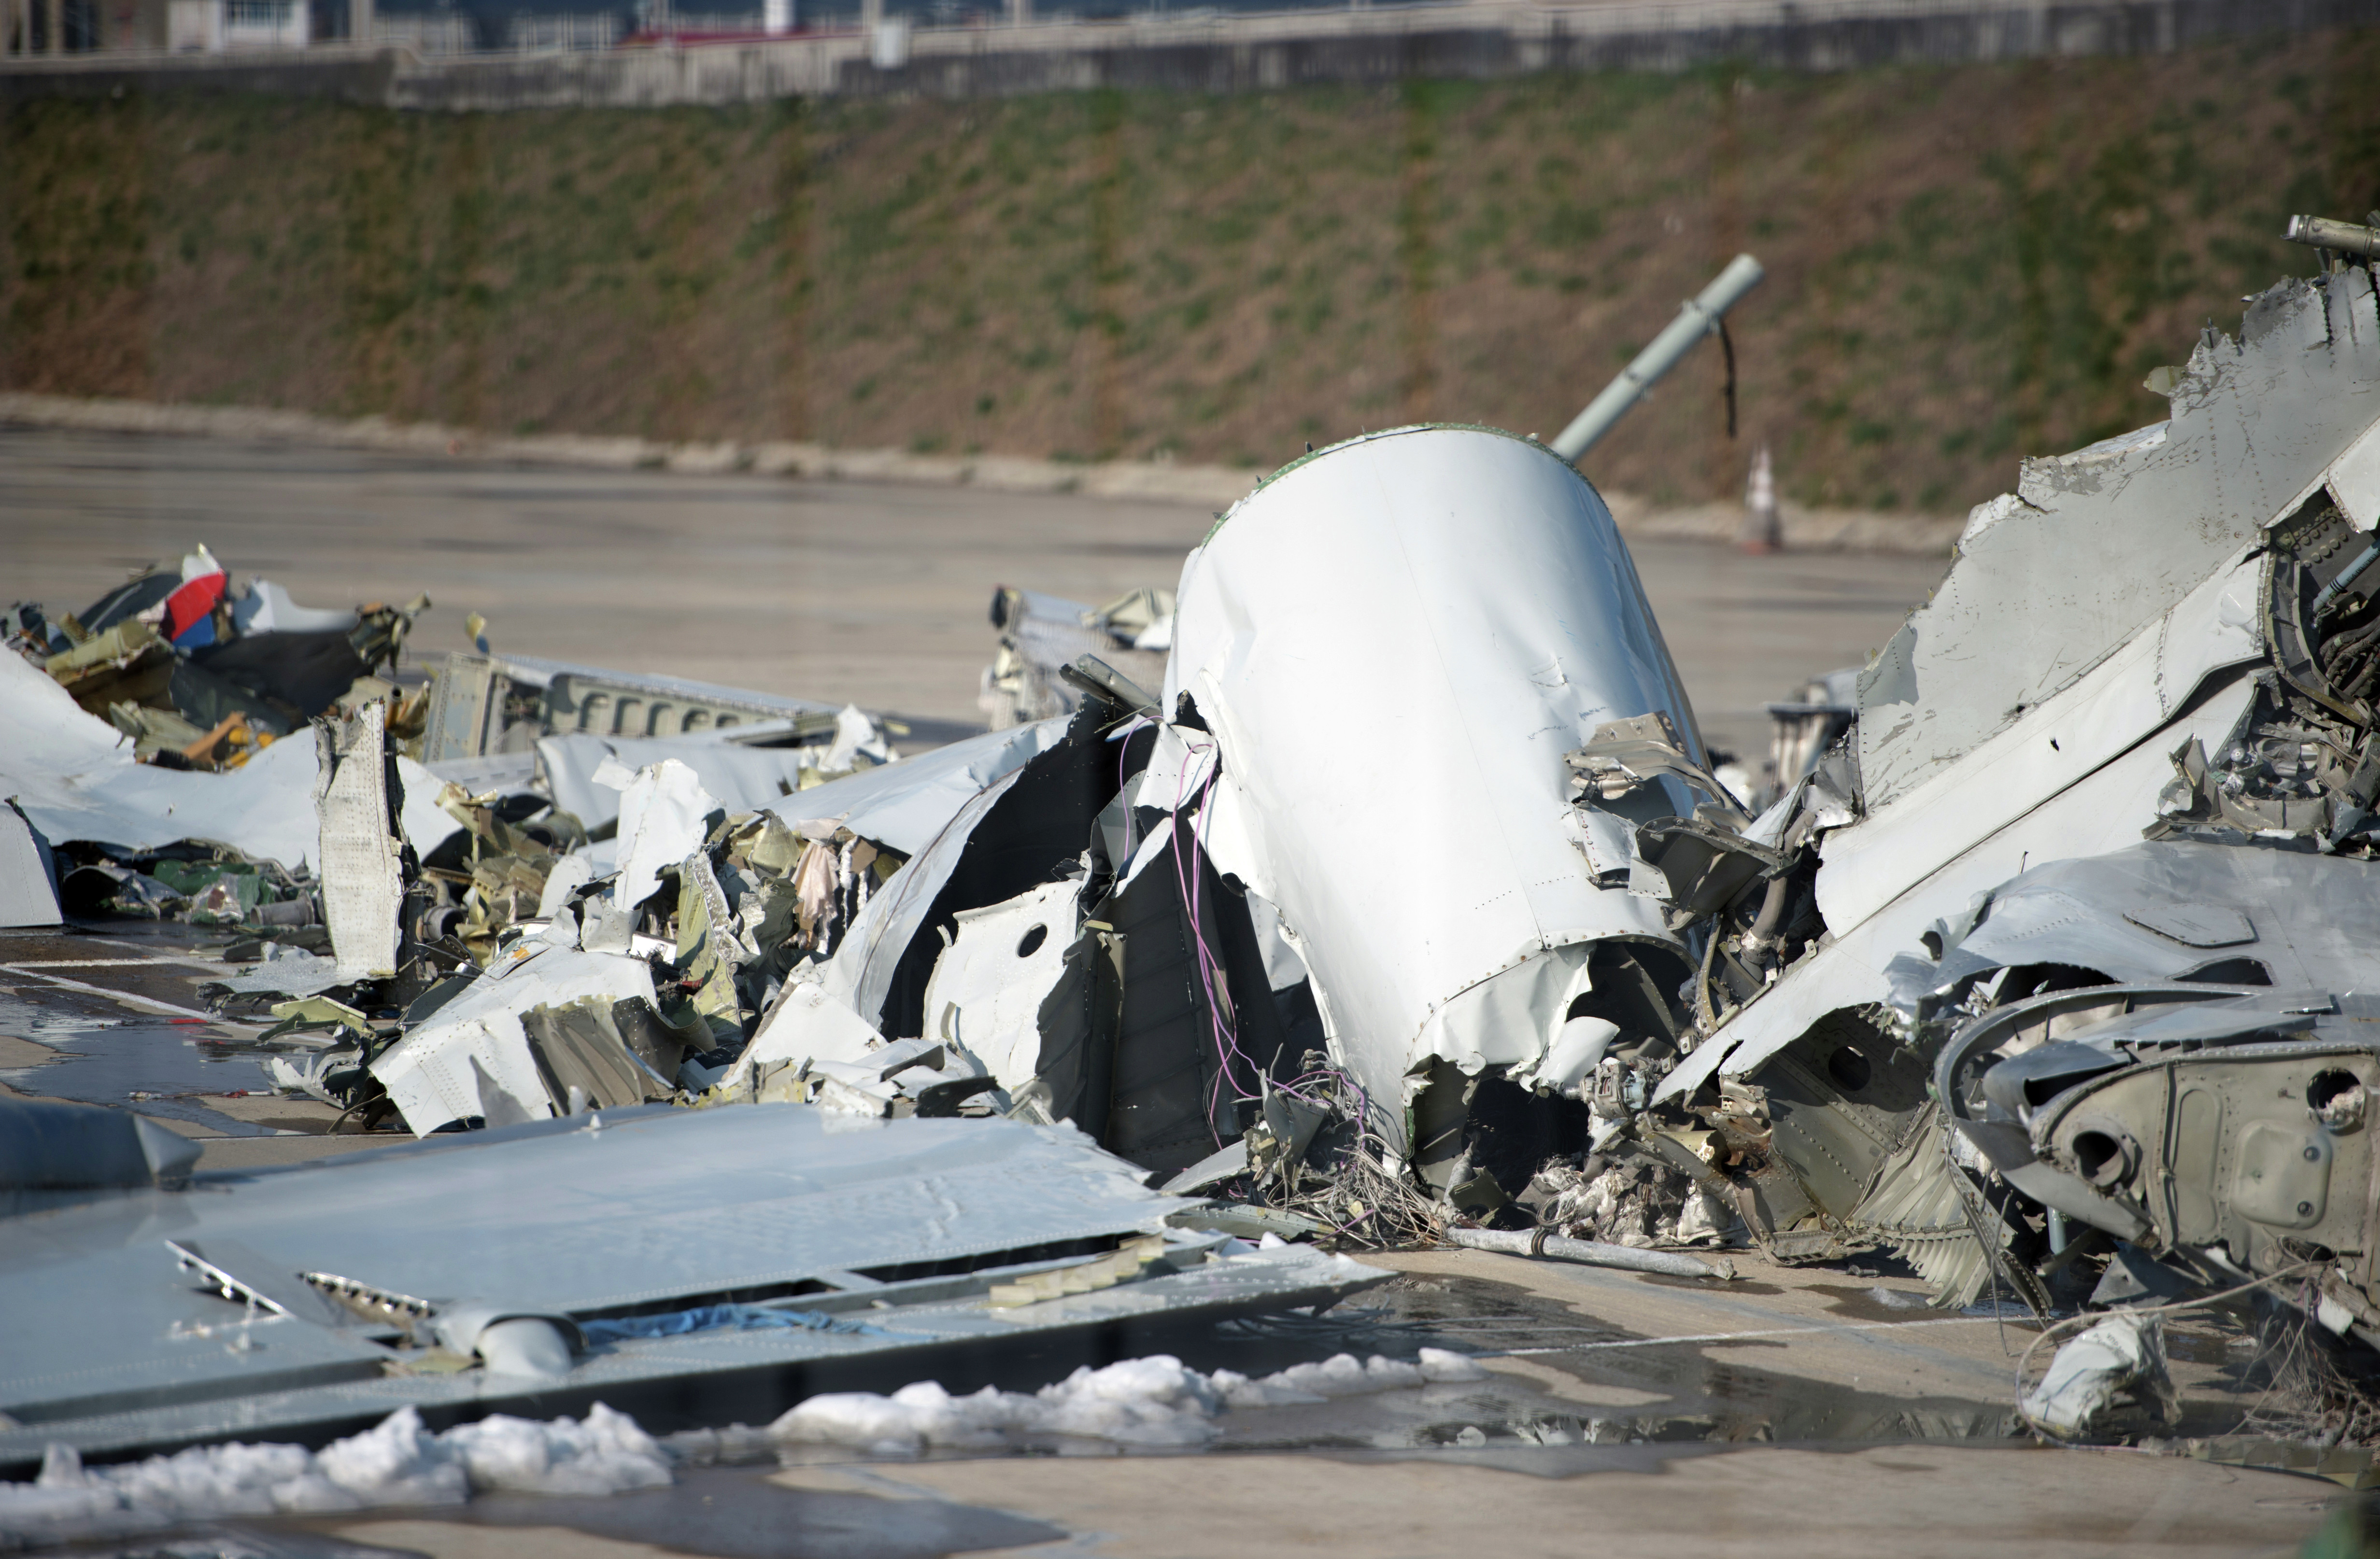 Авиакатастрофа сейчас. Катастрофа ту-154 под Сочи. Крушение ту 154 в Сочи. Ту 154 катастрофа Сочи 2016. Катастро́фа ту-154 под Со́чи.